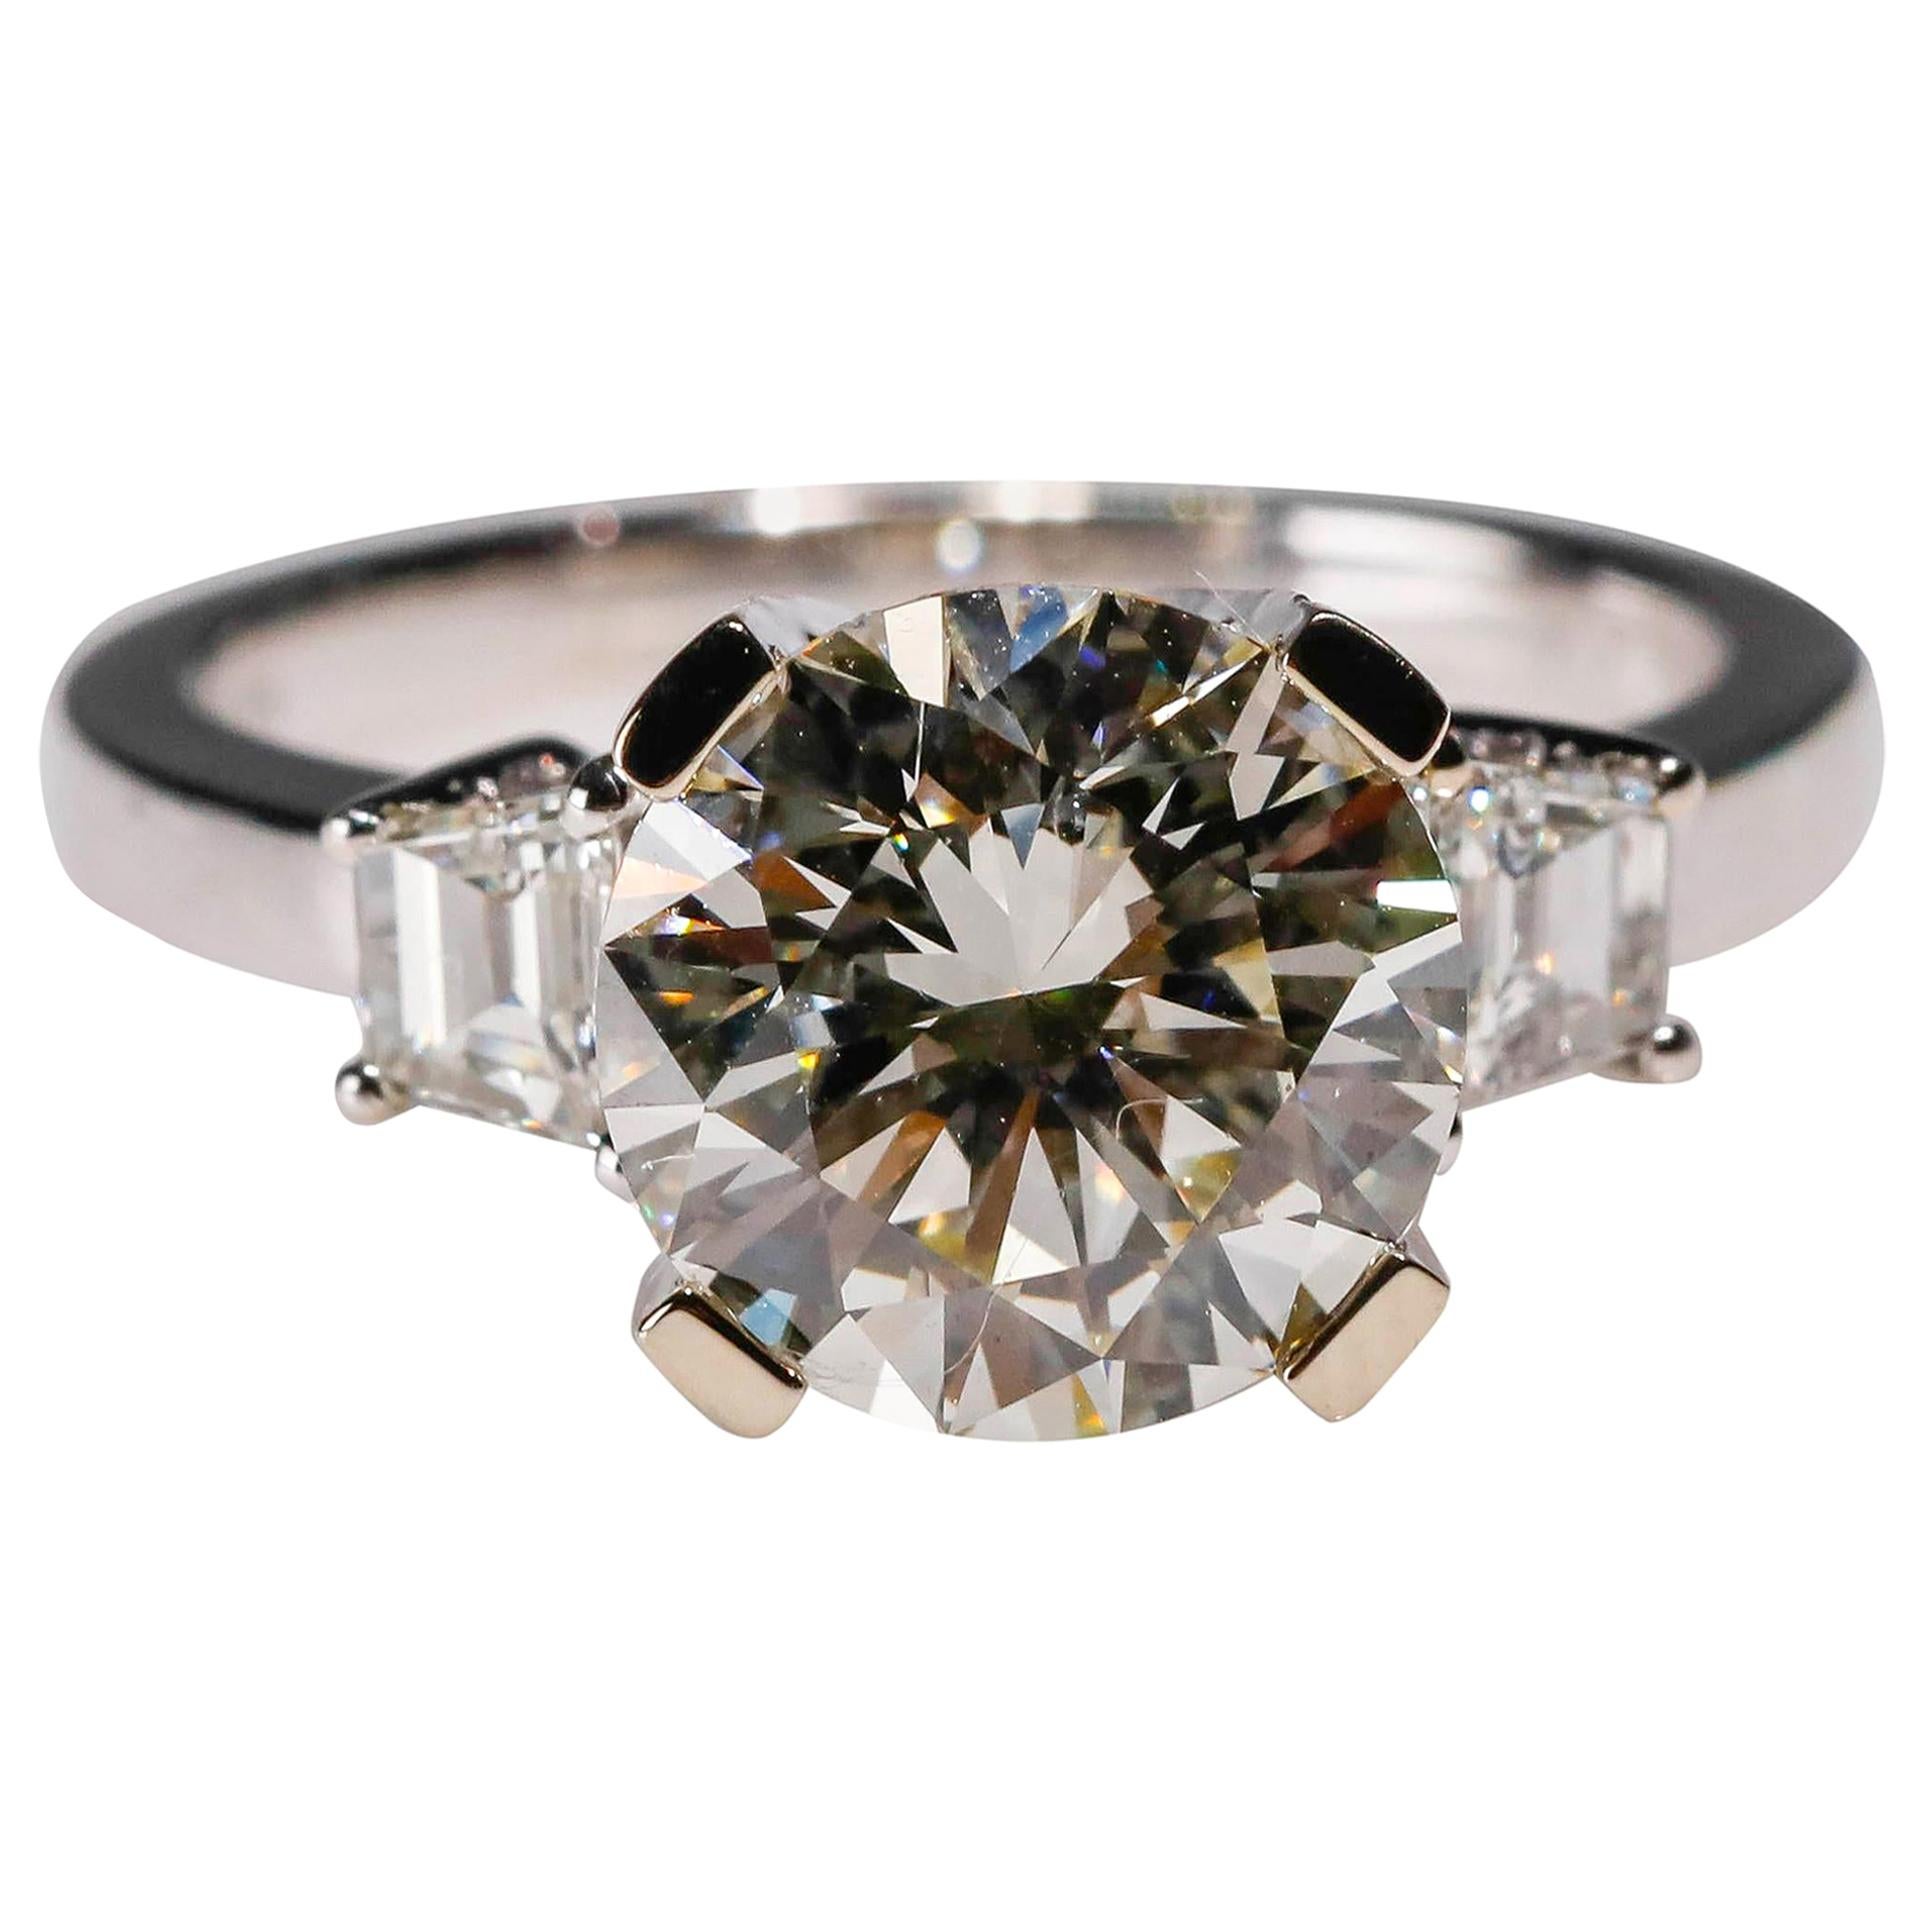 14 Karat White Gold 4 Carat Round Diamond Solitaire Engagement Ring by Natalie K